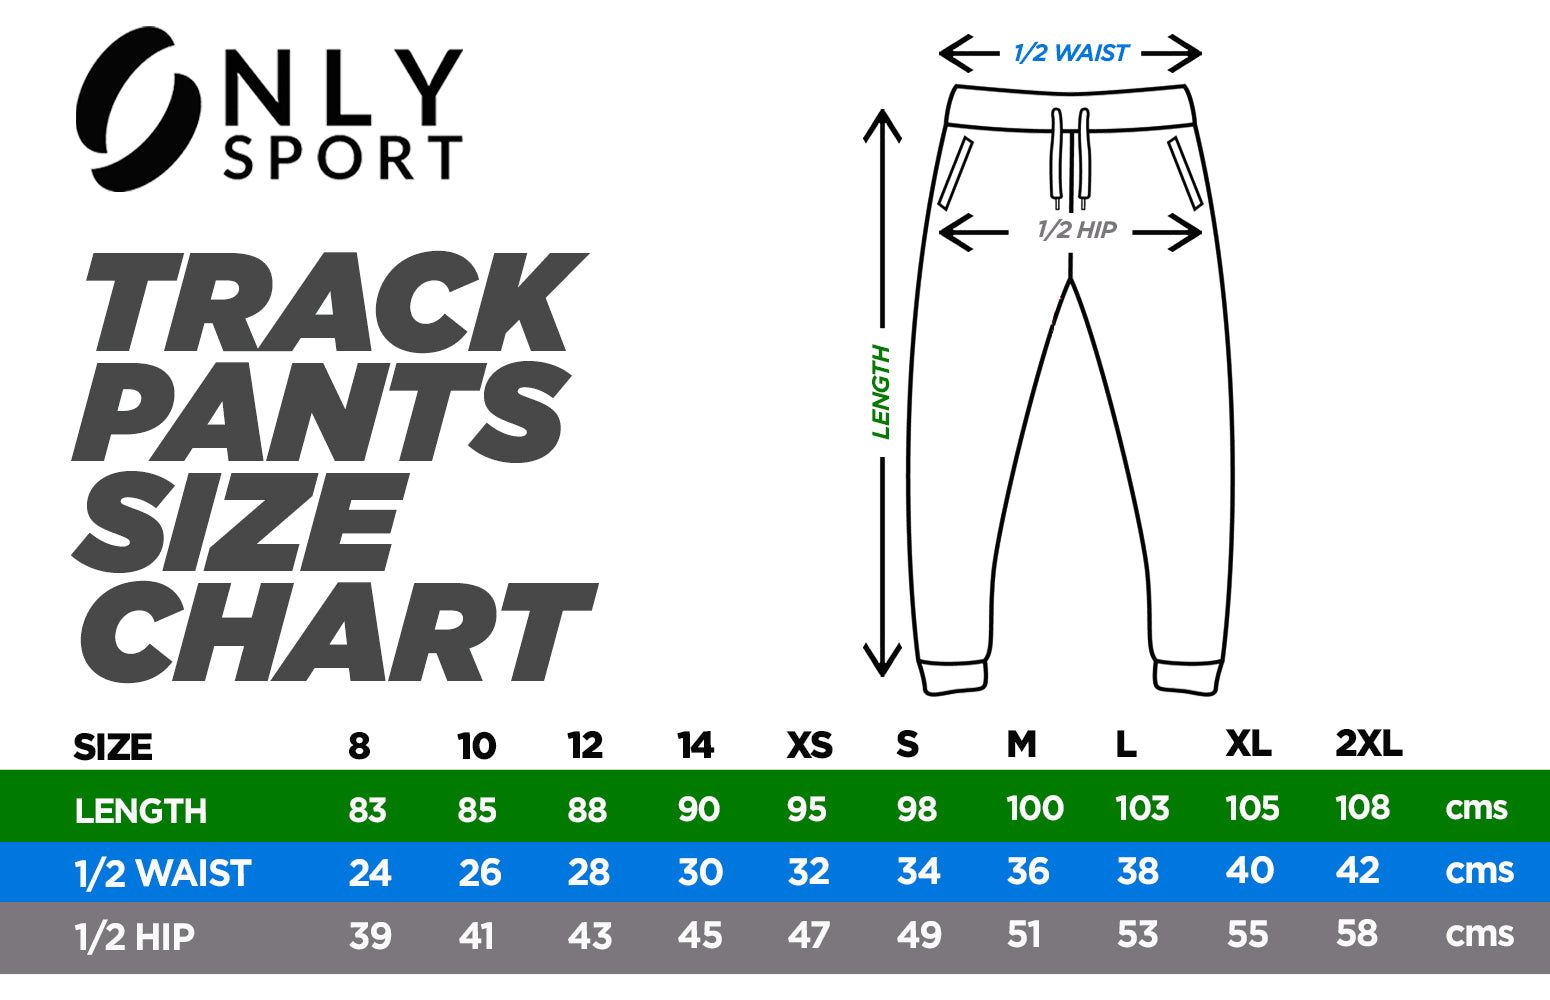 Navy Striped Nike Track Pants (sz. S) 1